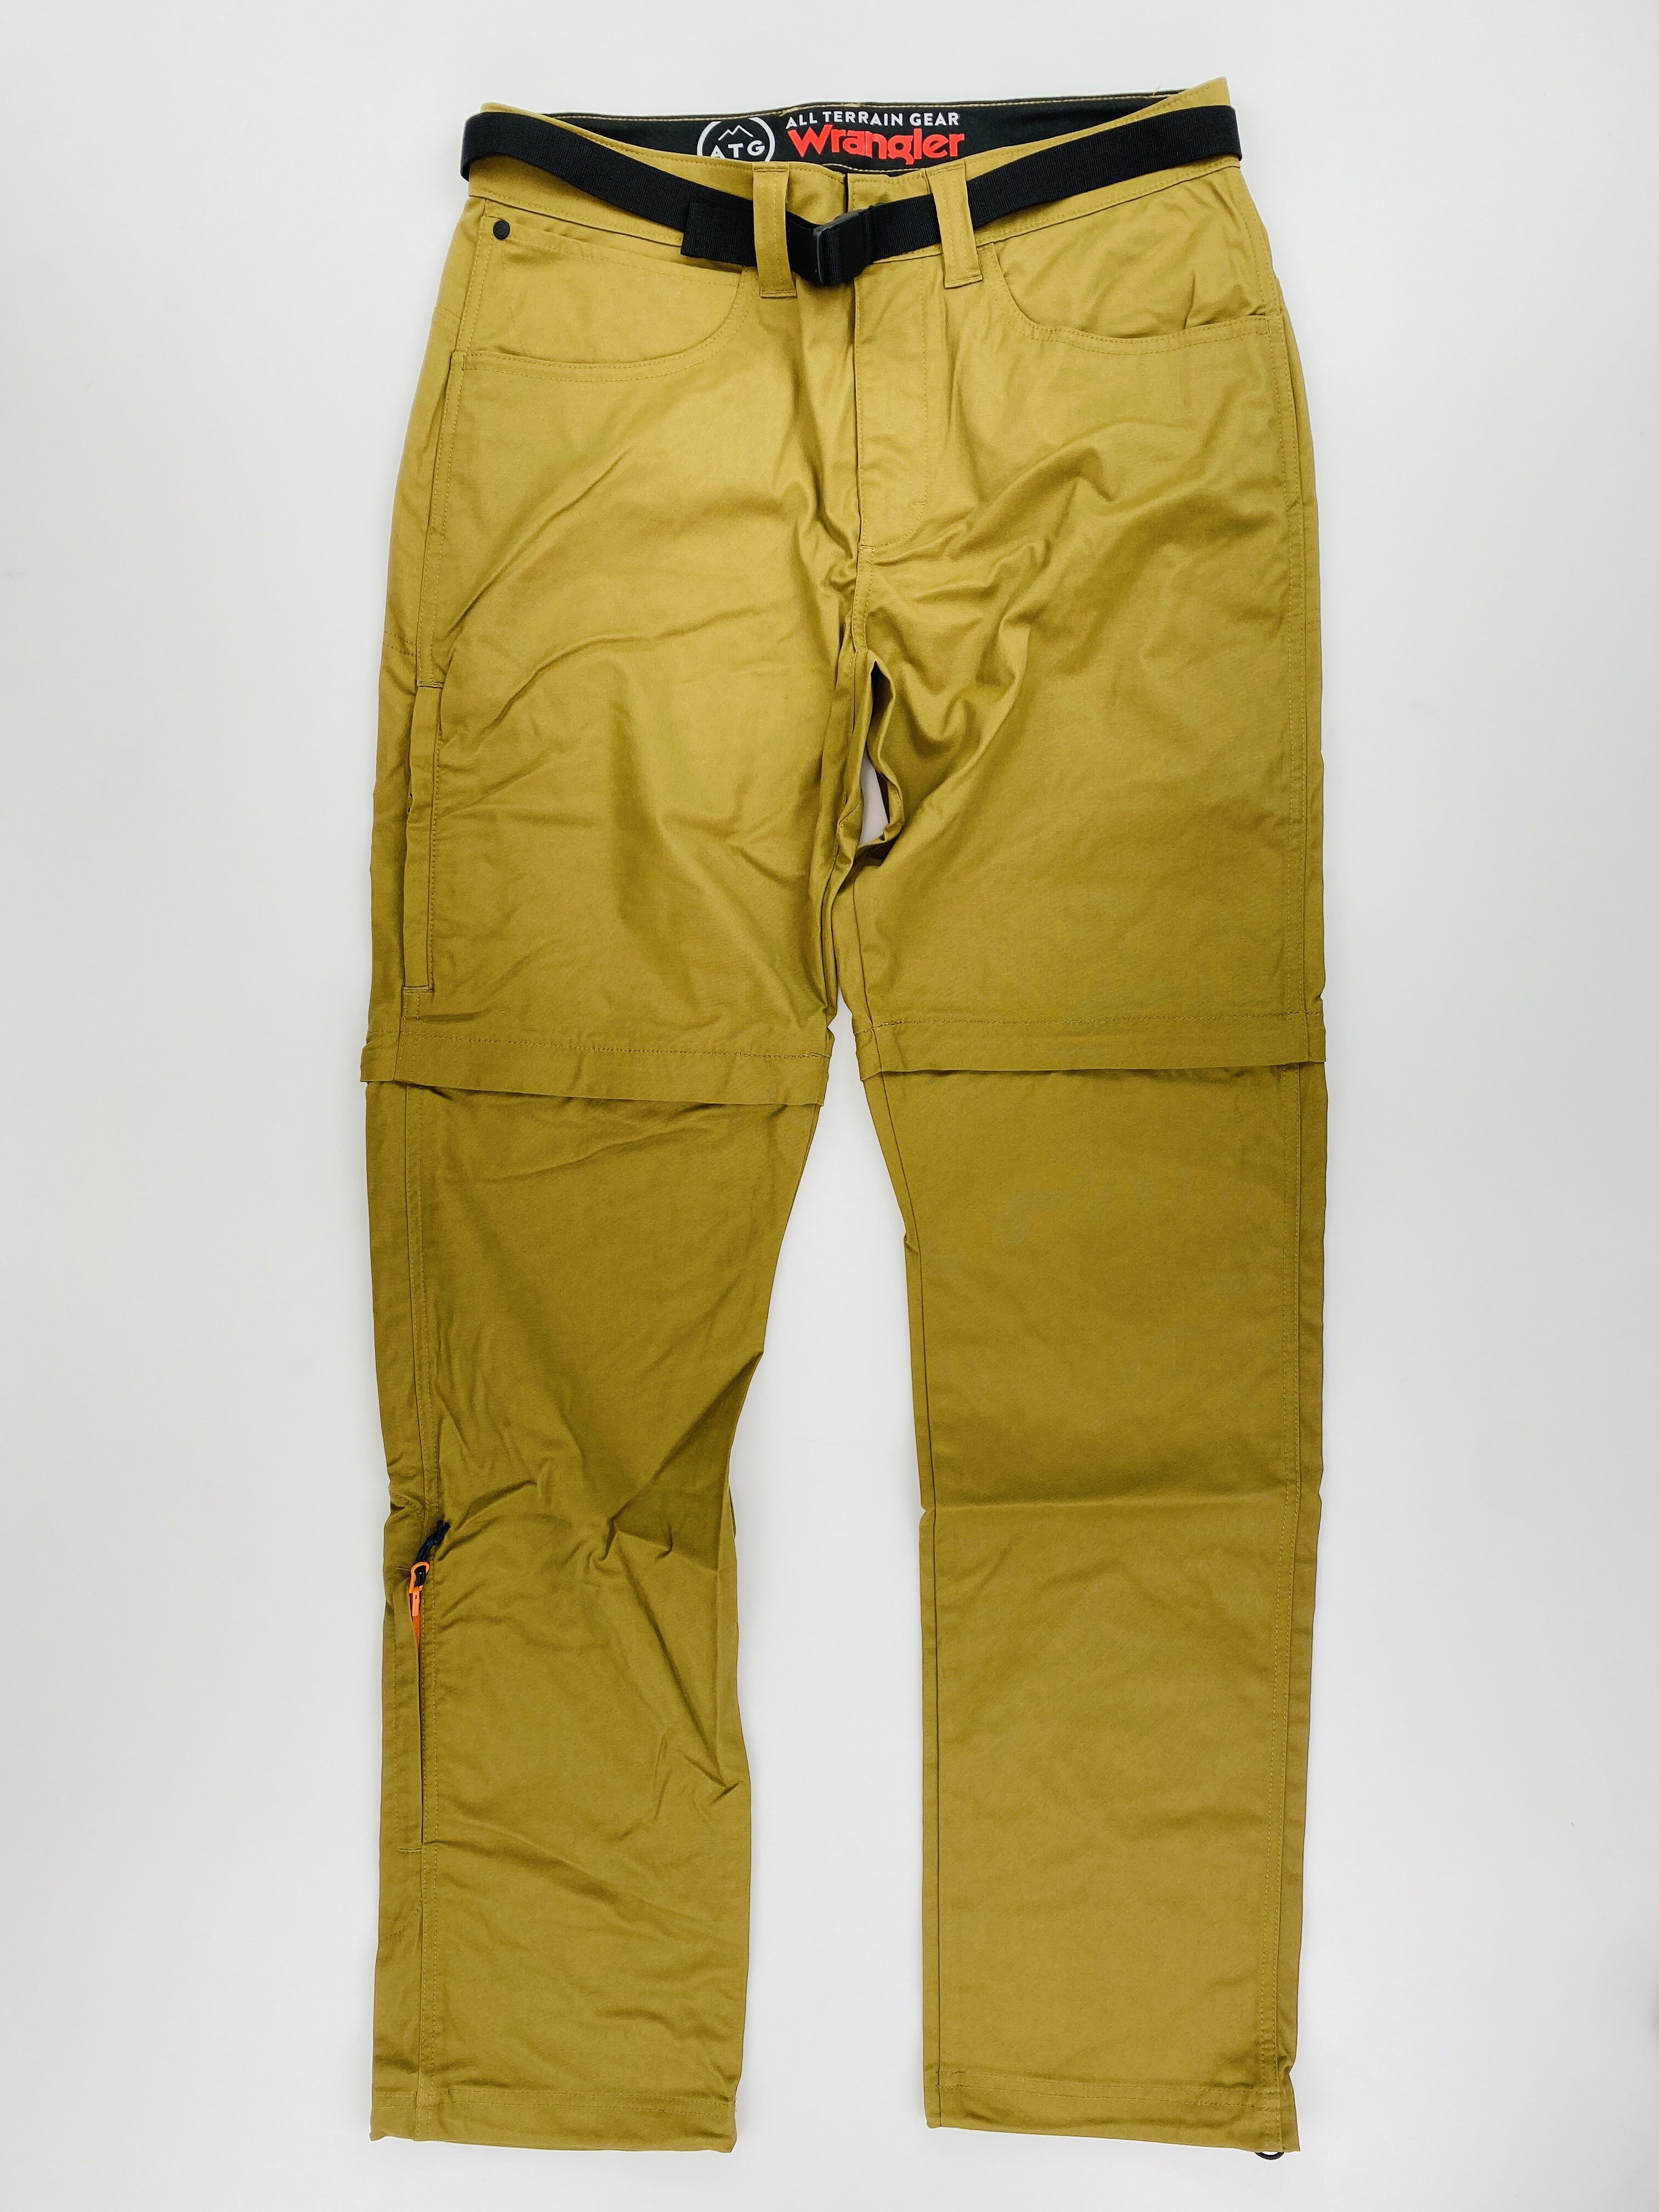 Wrangler Packable Zipoff Carg - Seconde main Pantalon randonnée homme - Marron - US 32 | Hardloop